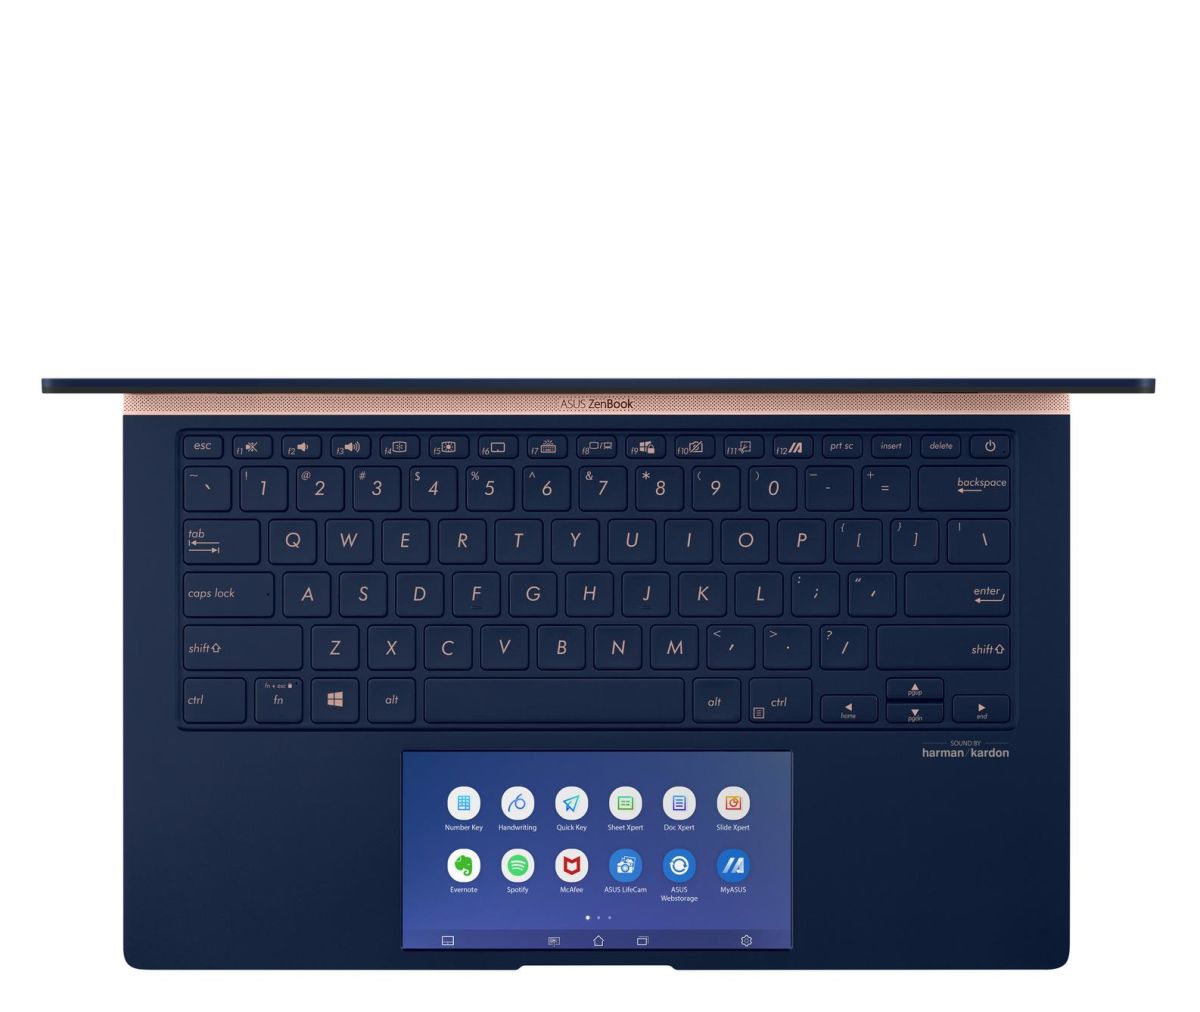 ASUS Zenbook 14 UX434 Home and Business Laptop (Intel i7-10510U 4-Core, 16GB RAM, 2TB m.2 SATA SSD, 14.0" Full HD (1920x1080), NVIDIA MX250, Wifi, Bluetooth, Webcam, 1xHDMI, Win 10 Pro) (Used) - image 4 of 6